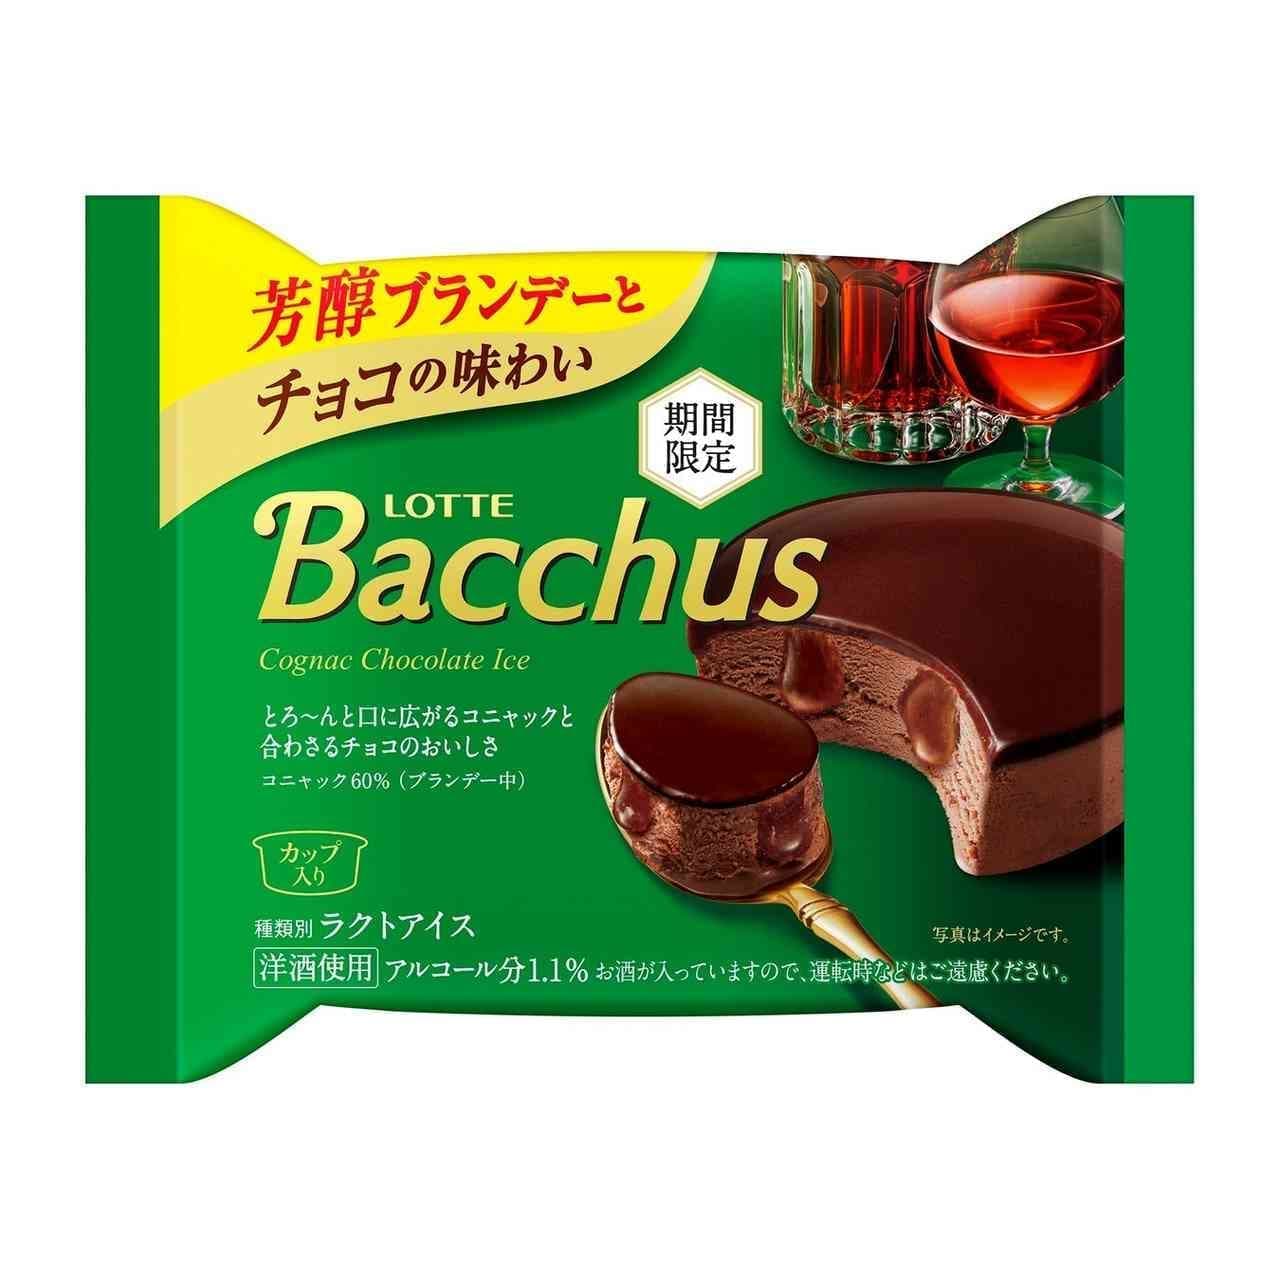 Lotte "Bacchus Chocolate Ice Cream